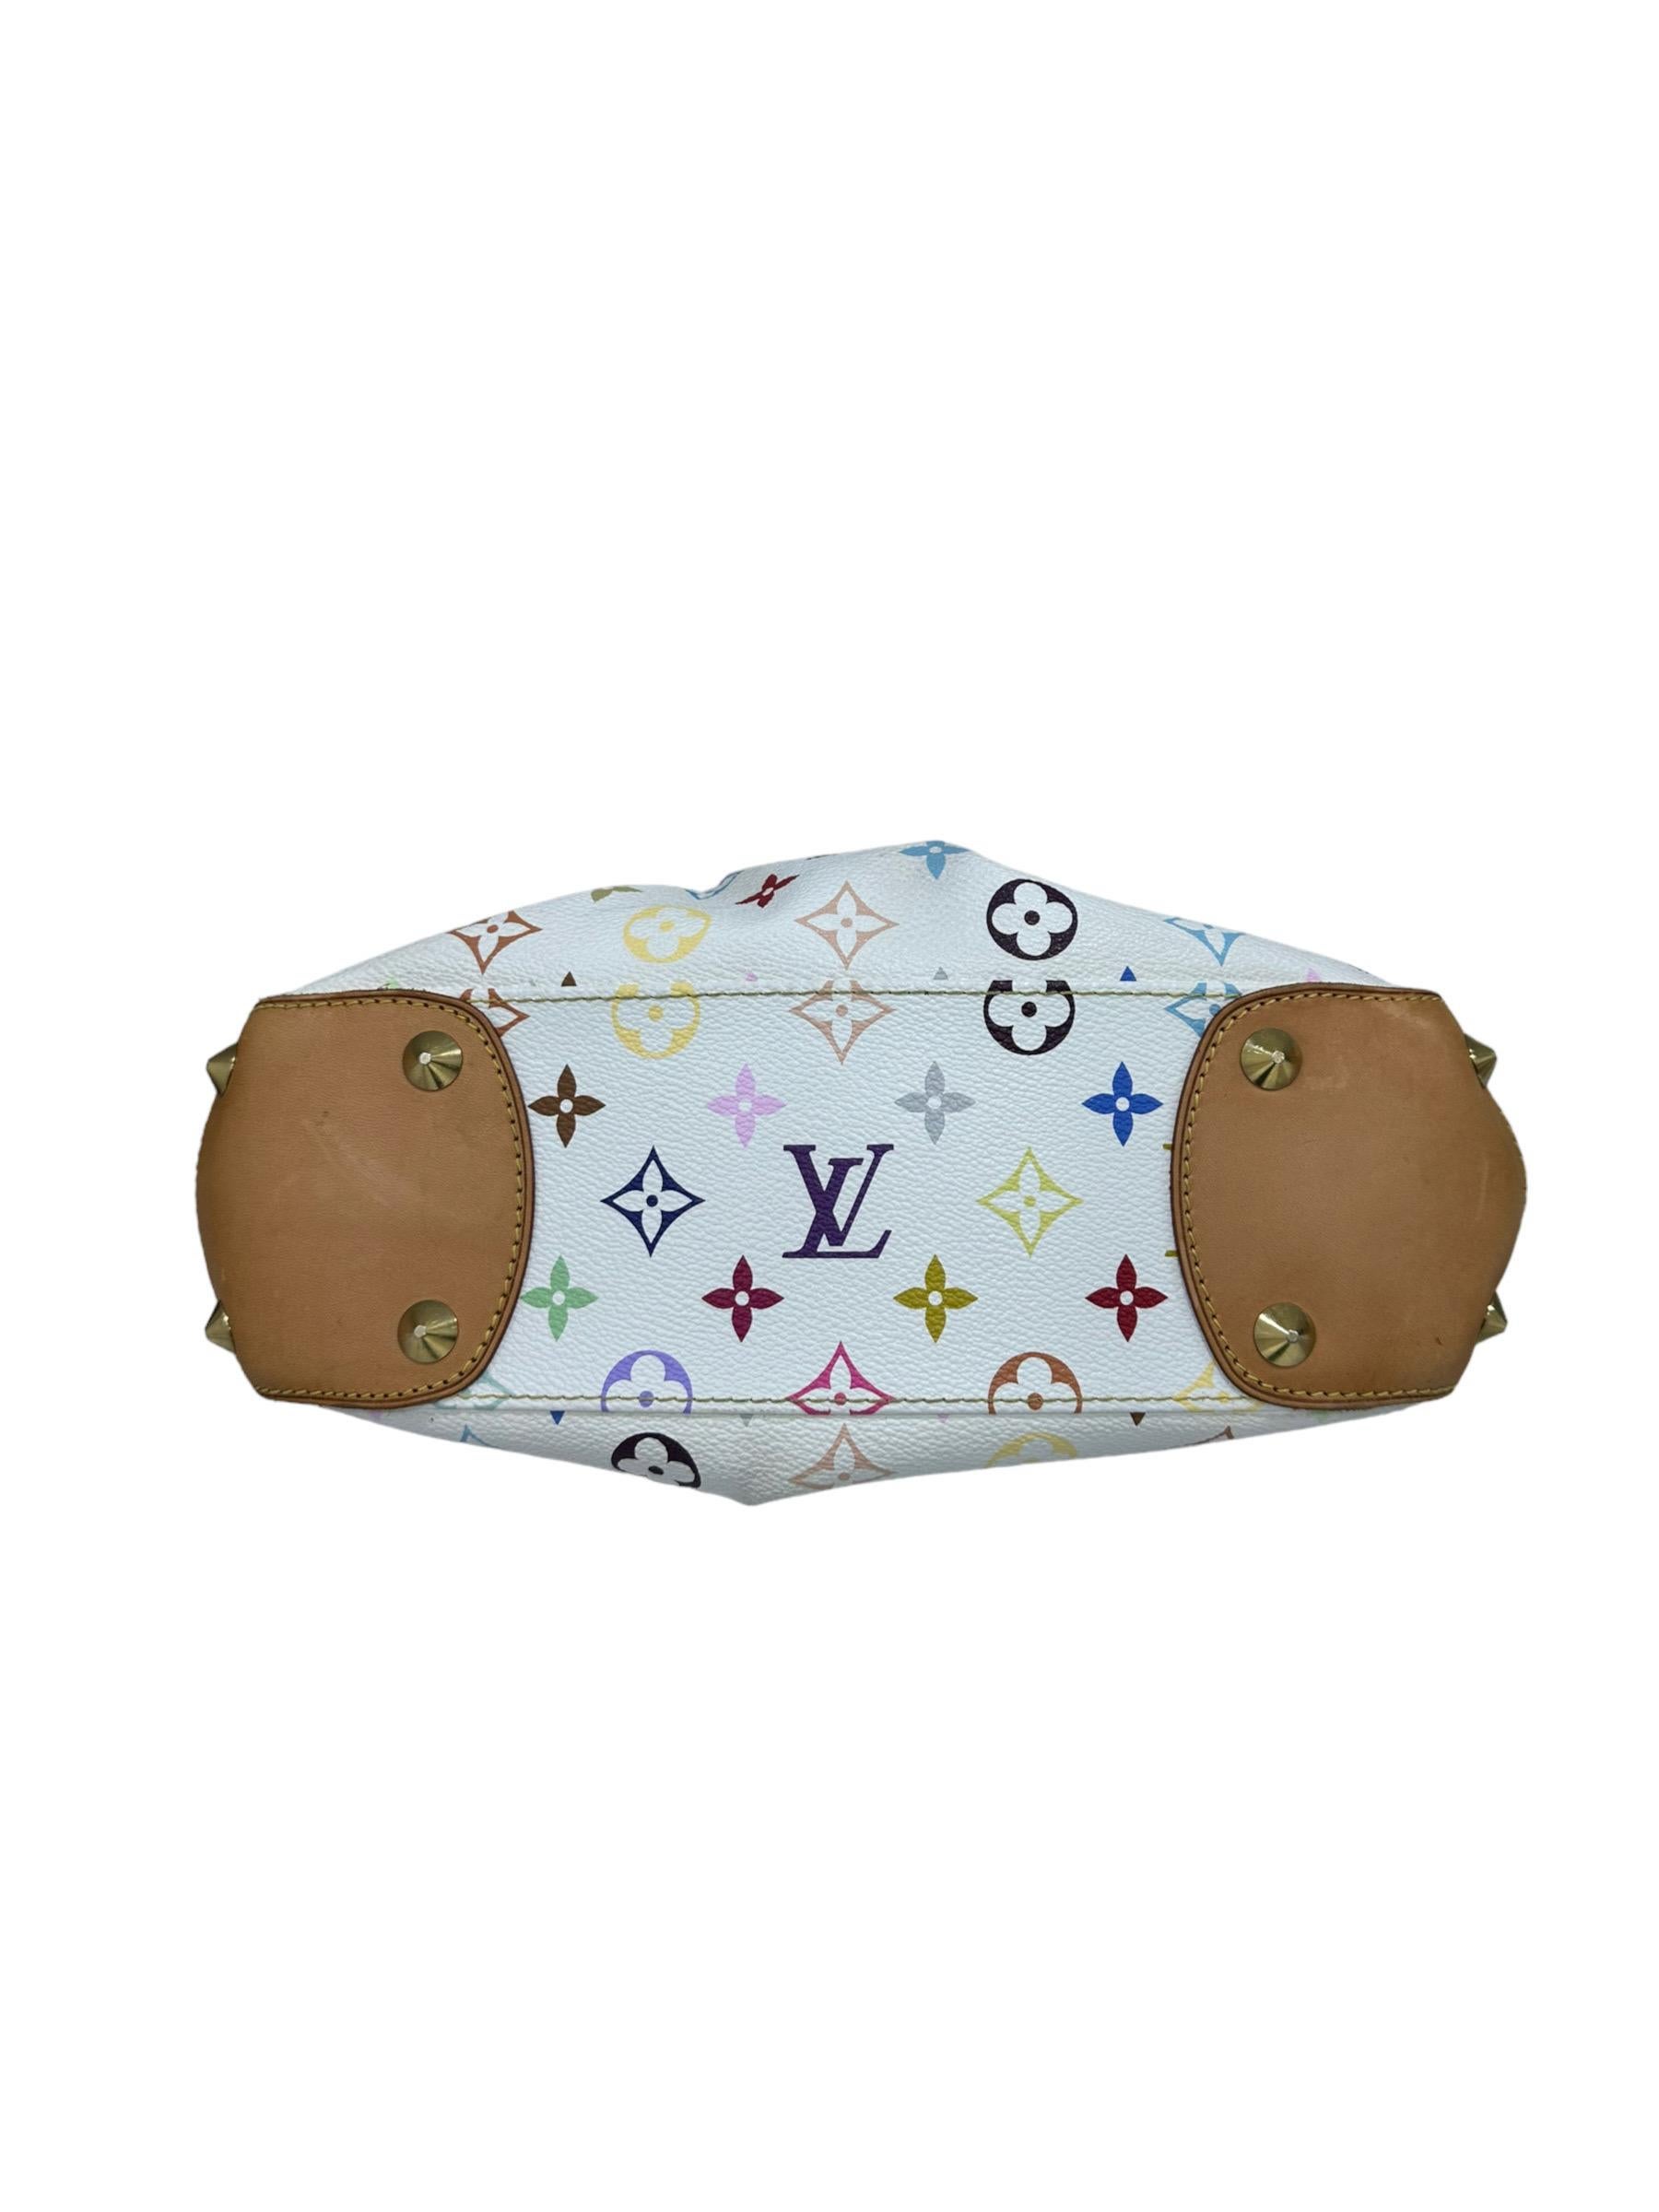 Louis Vuitton x Takashi Murakami Judy PM Limited Edition Shoulder Bag For Sale 4